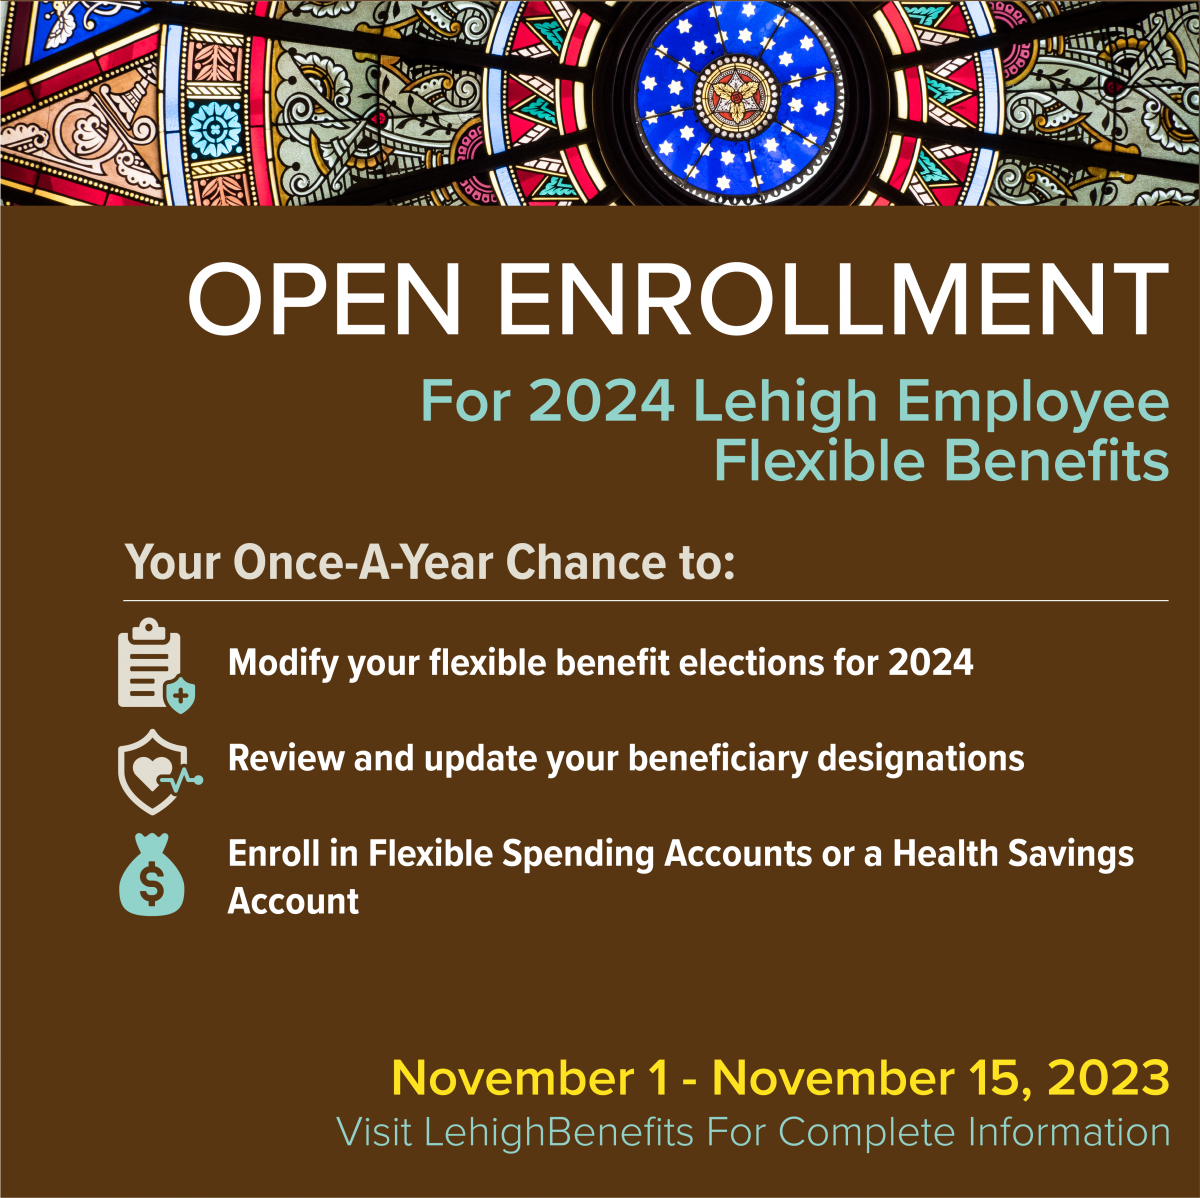 Open Enrollment for 2024 Flexible Benefits November 1 through 15